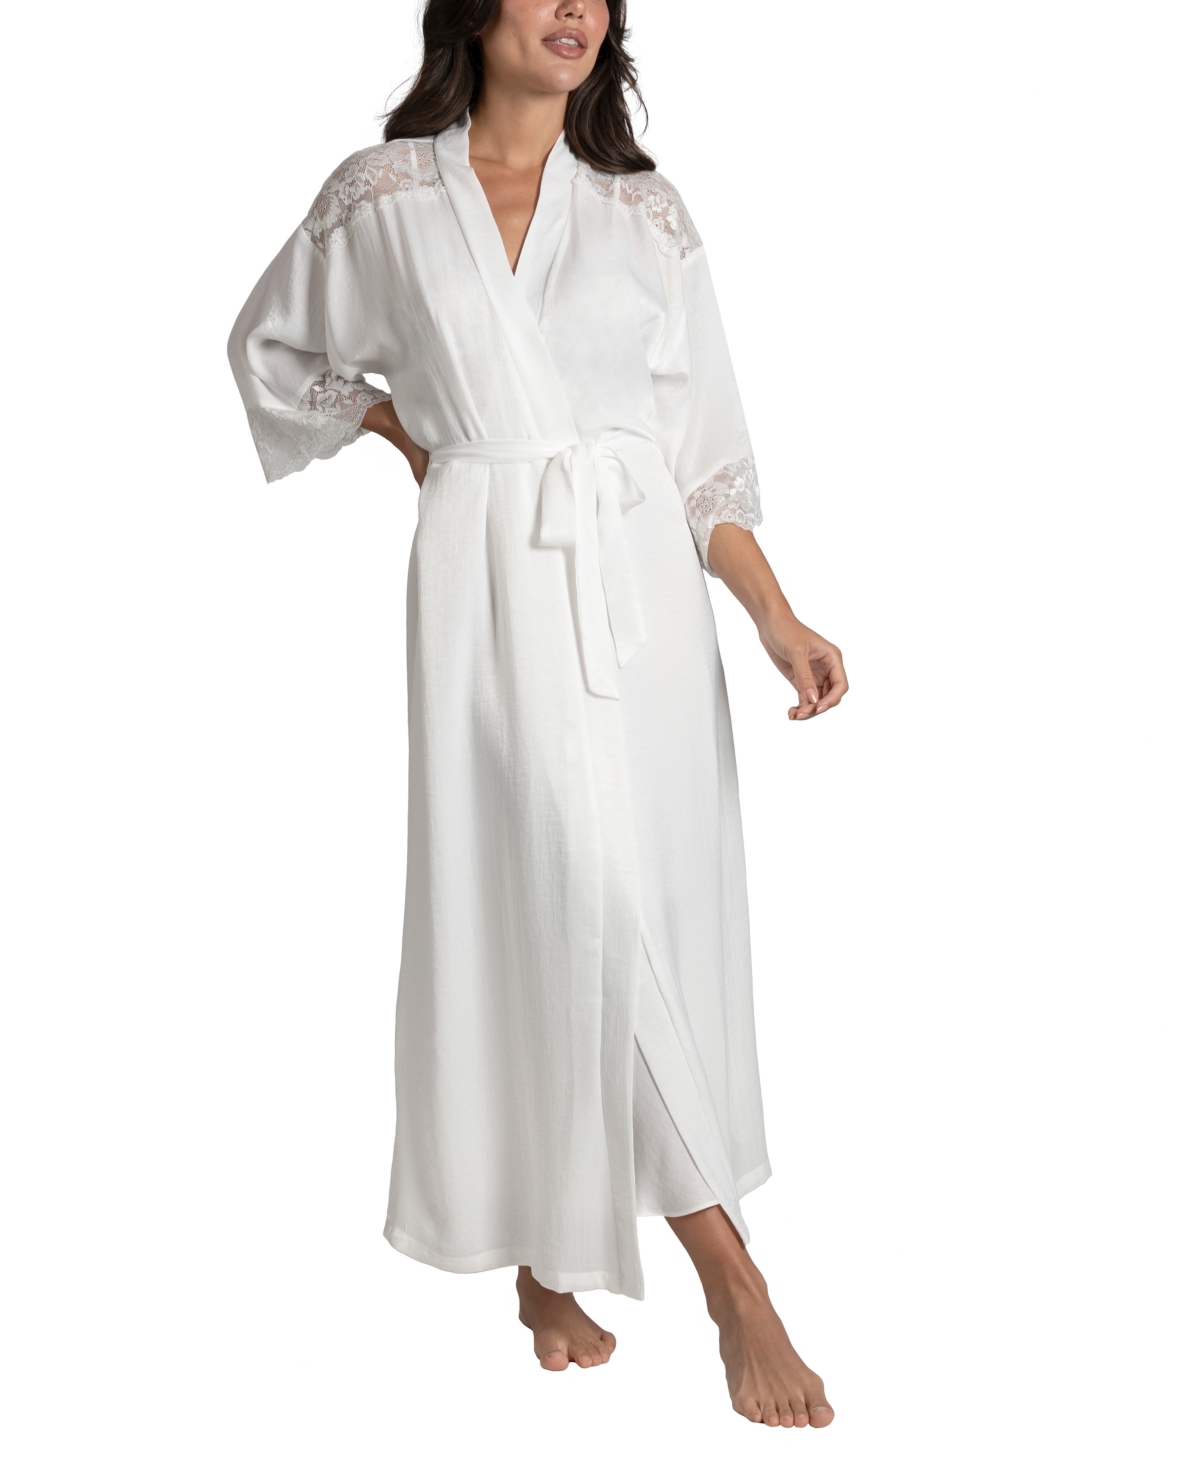 Linea Donatella Sexy Basics Lace Cami & Shorts Lingerie Pajama Set